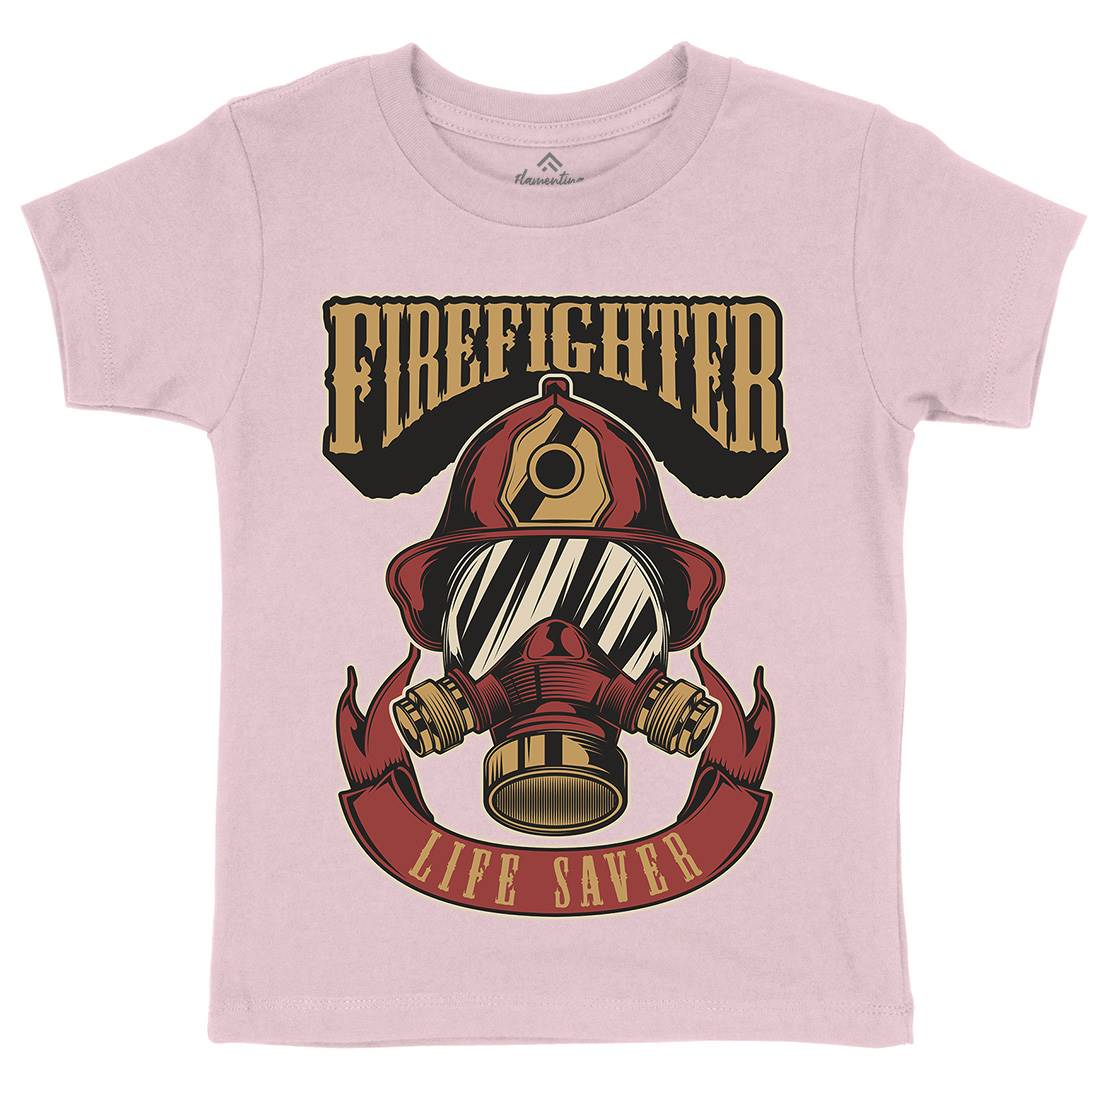 Life Saver Kids Crew Neck T-Shirt Firefighters C827